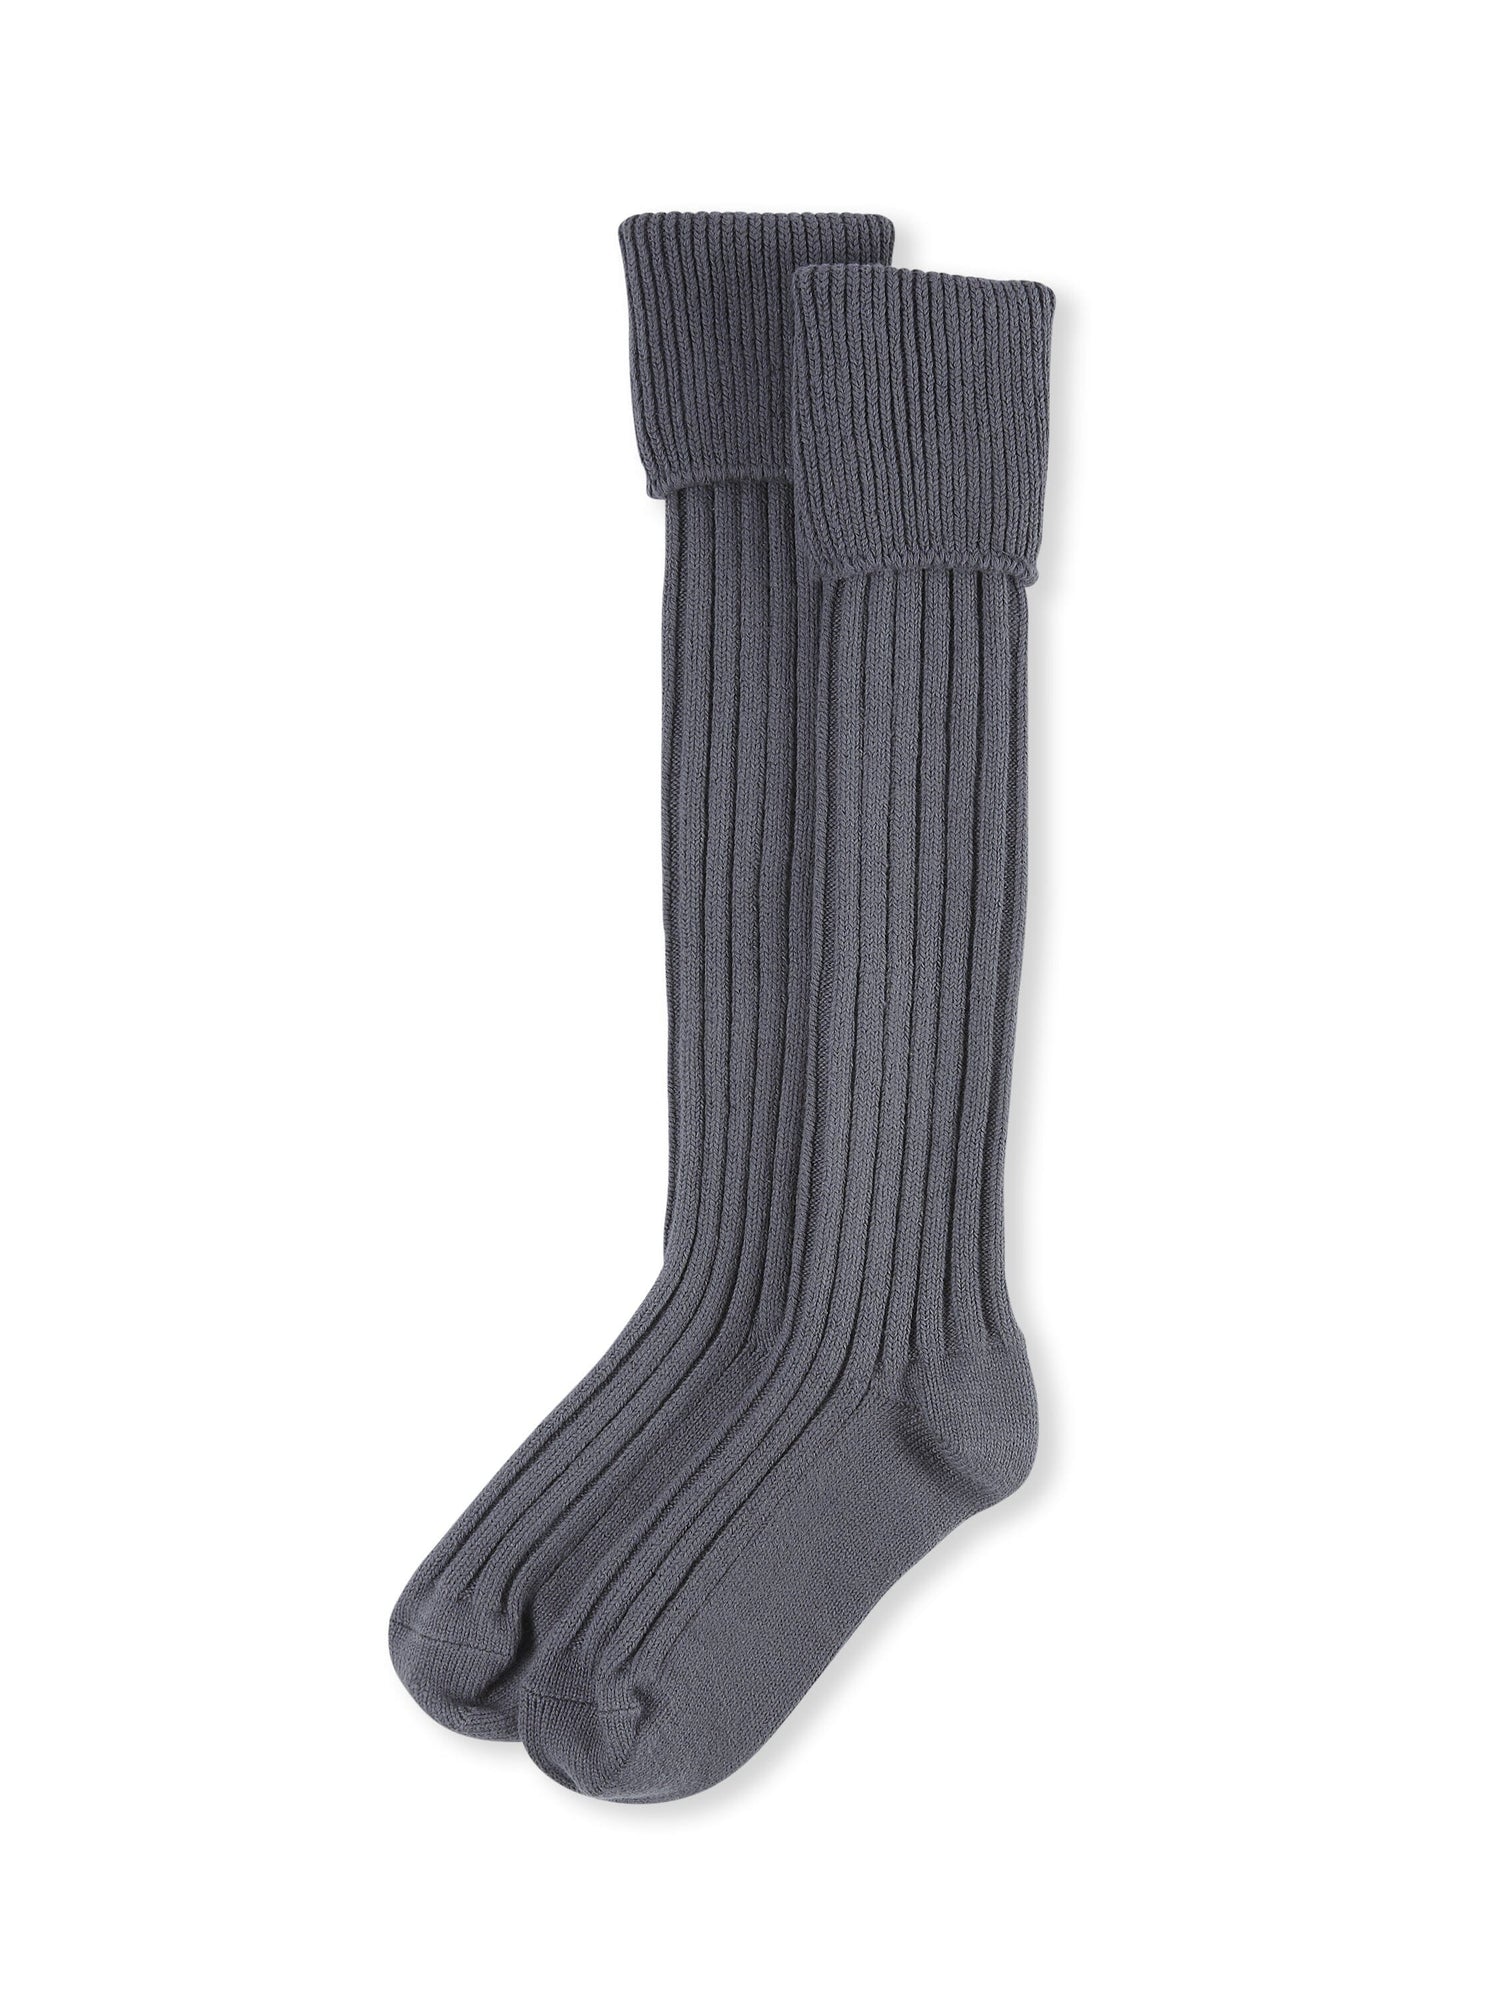 Long Boot Sock | Charcoal Socks Chalk 